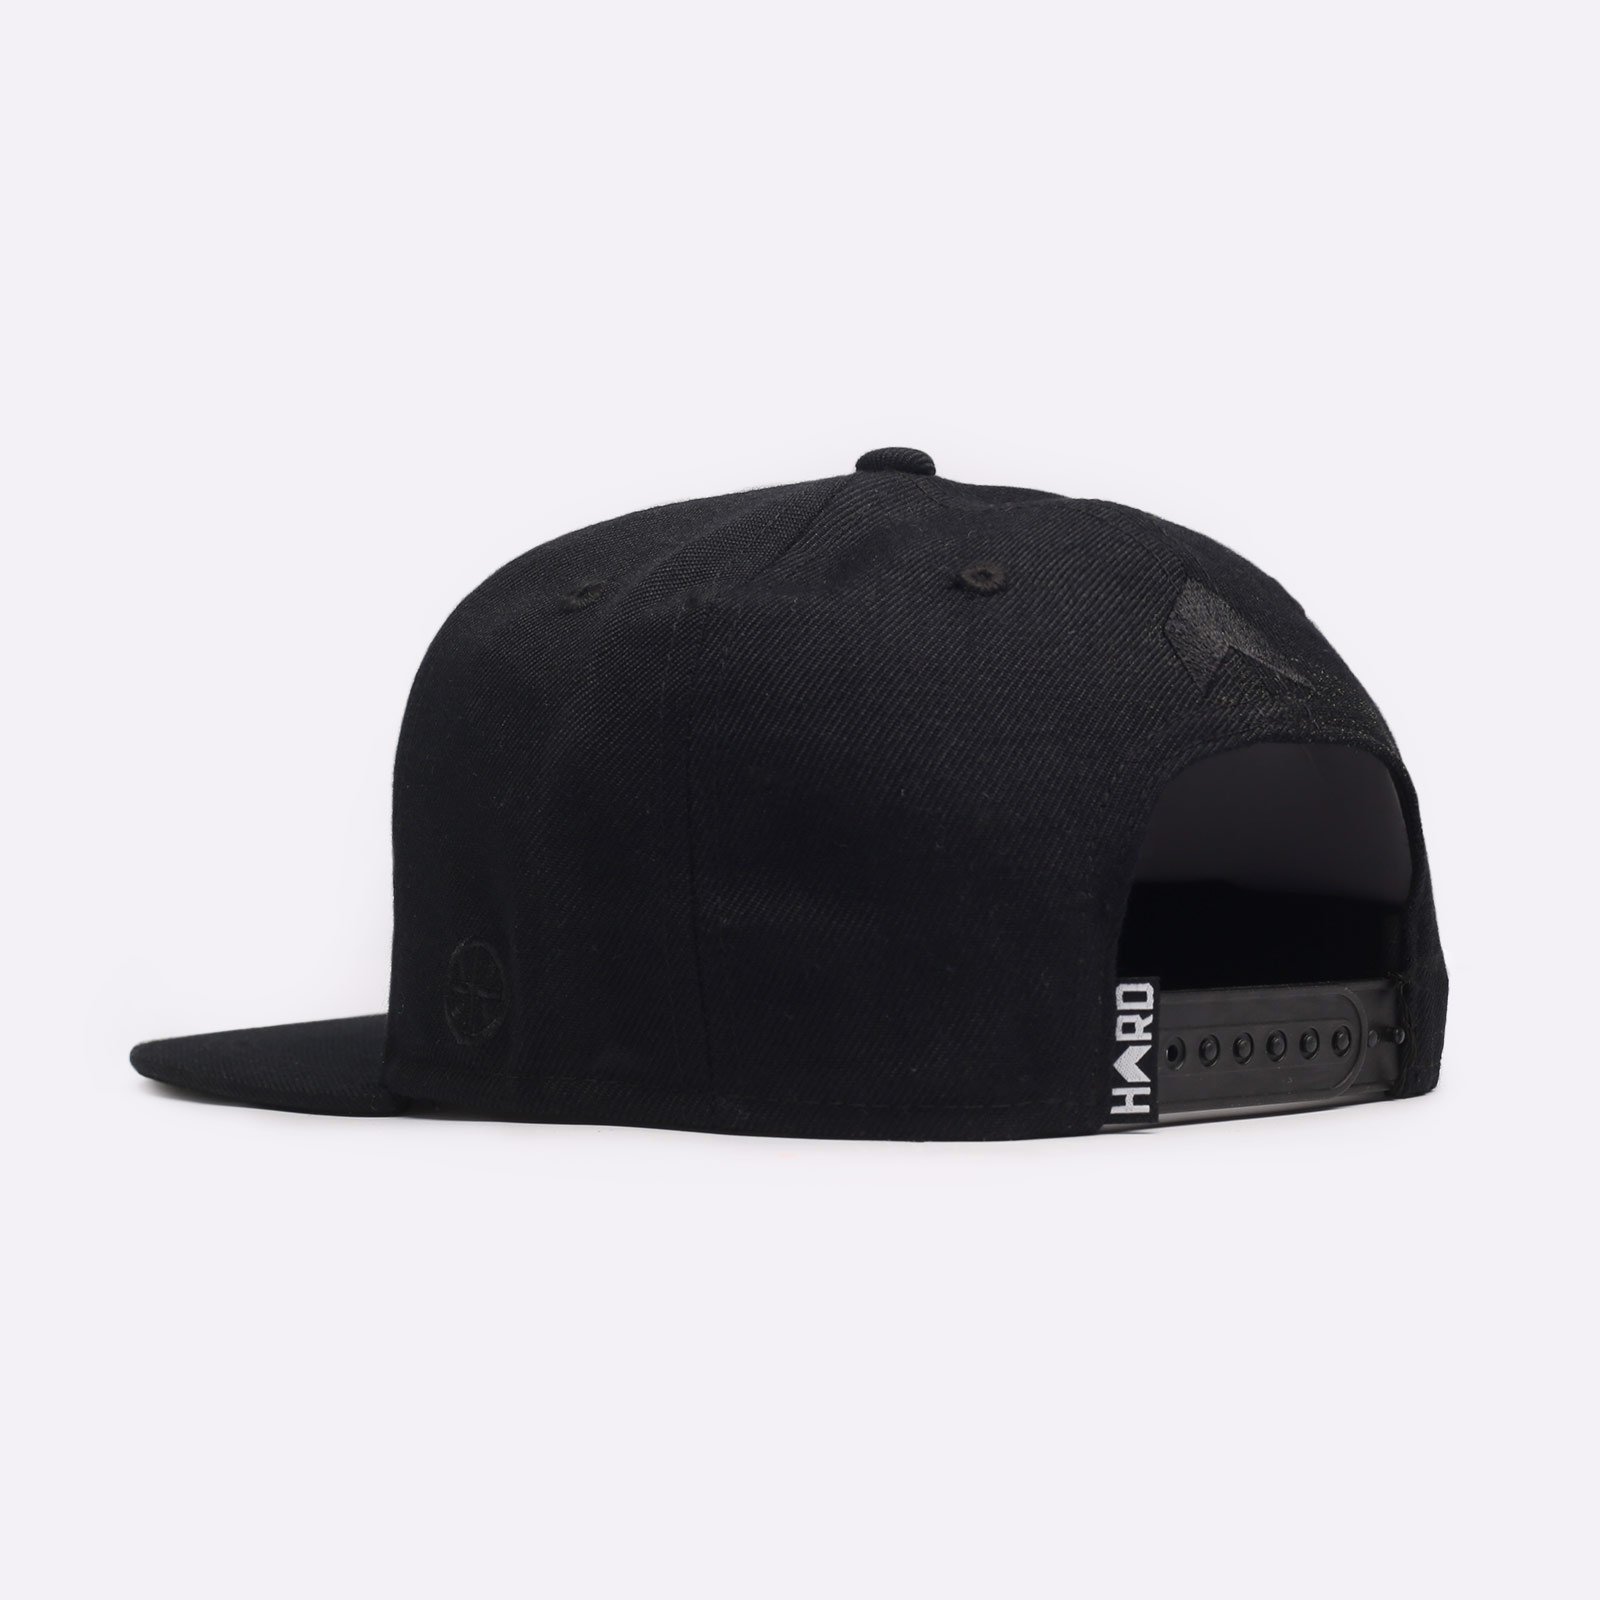 мужская черная кепка Hard Logo Snapback Hard blk/blk-0015 - цена, описание, фото 2